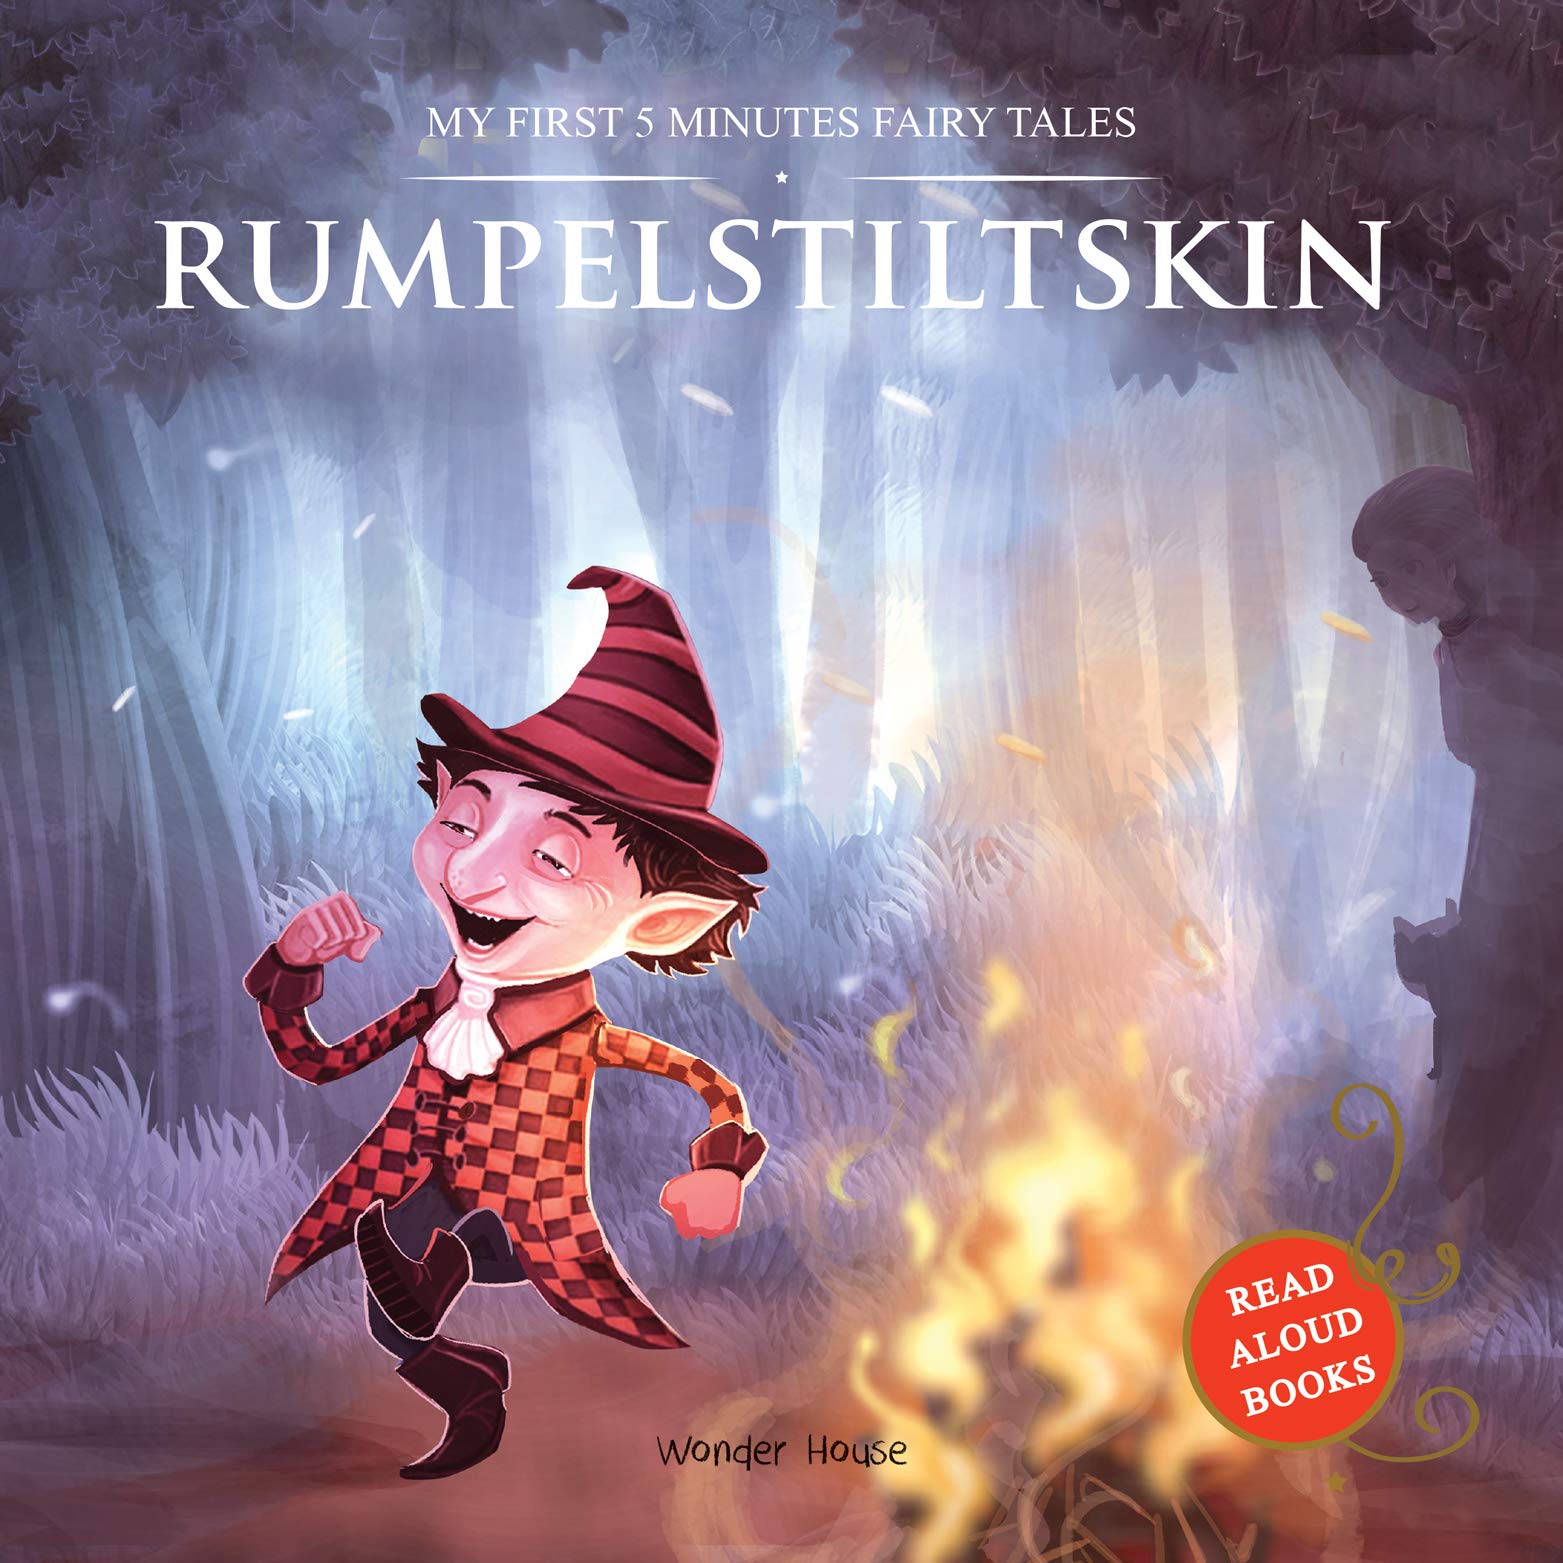 My First 5 Minutes Fairy Tales Rumpelstiltskin (Read Aloud Books)